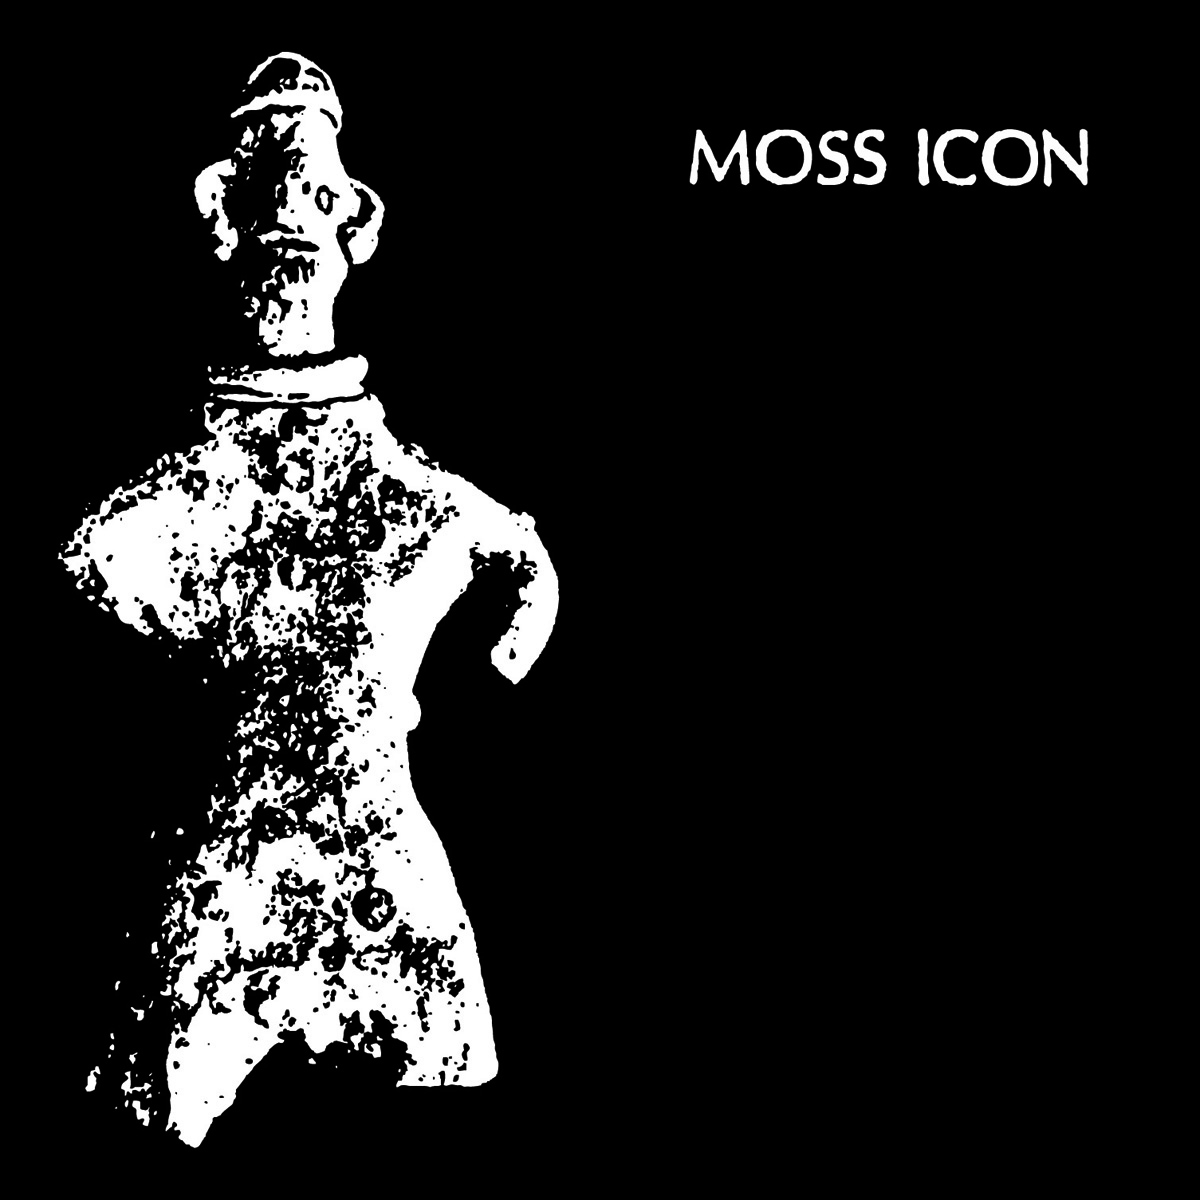 Moss Icon compilation